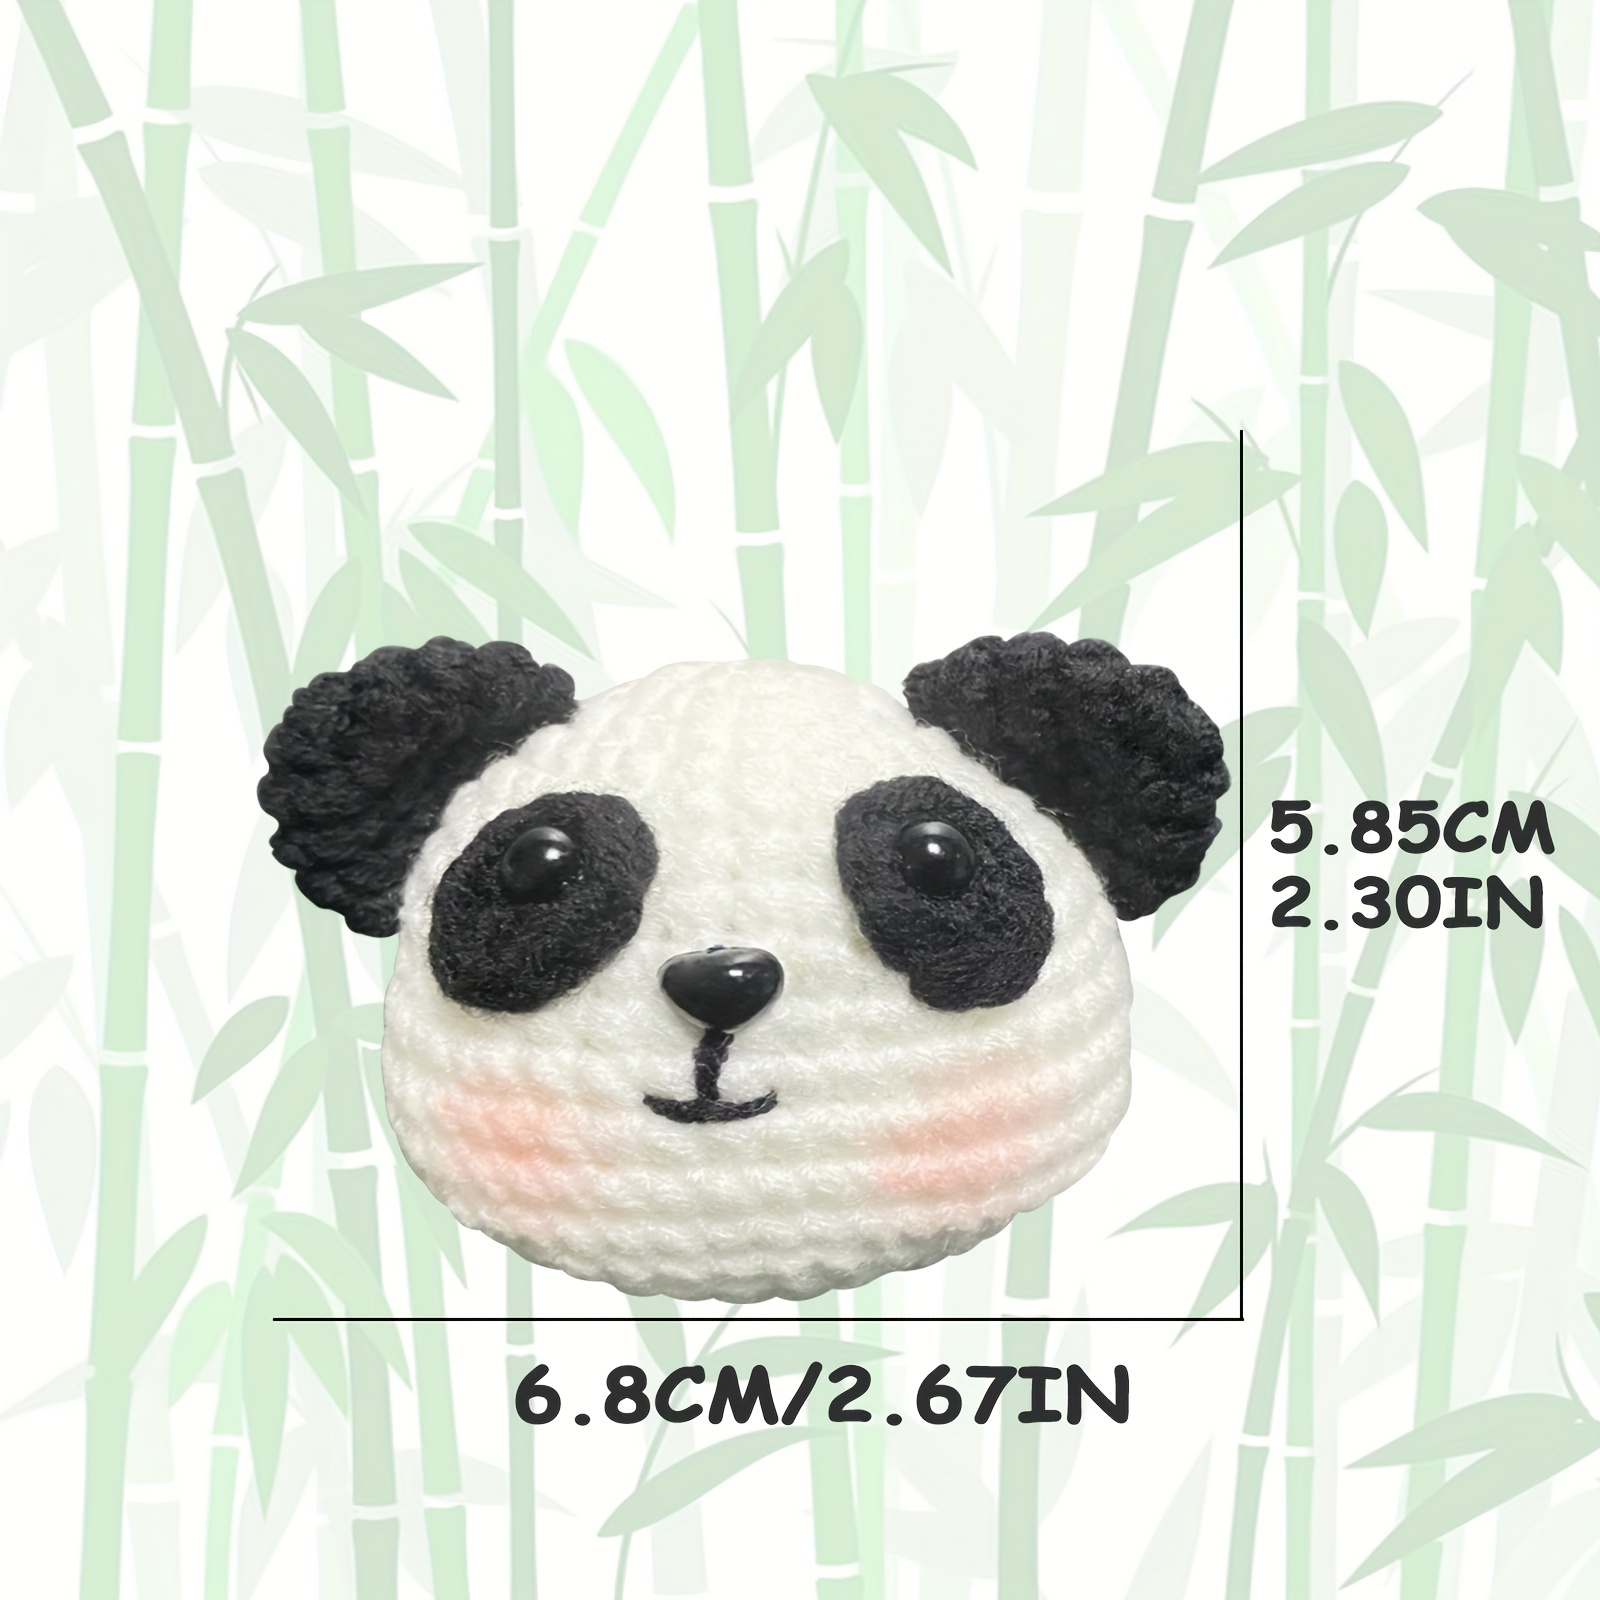  Animal Crochet Kit for Beginners: Thick Lips Pattern